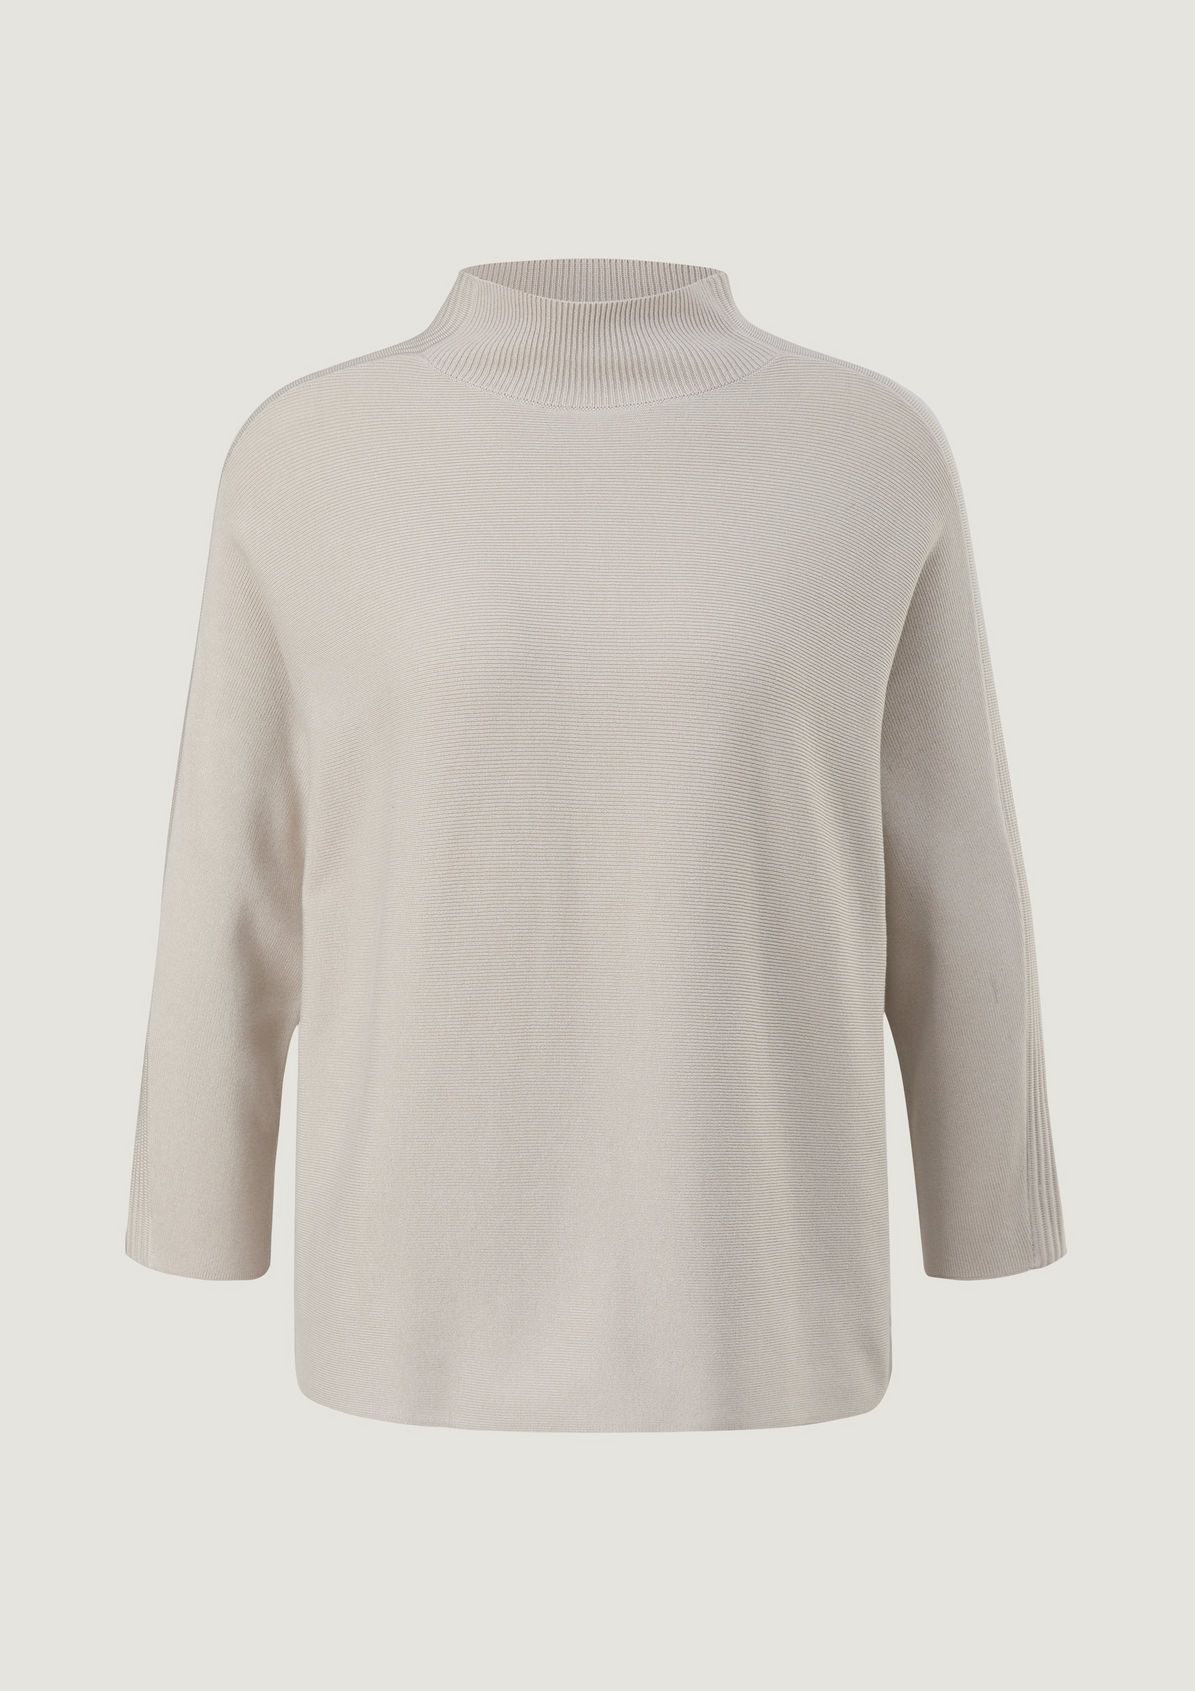 Primark sweatshirt Beige/Brown 46                  EU WOMEN FASHION Jumpers & Sweatshirts Shearling discount 79% 